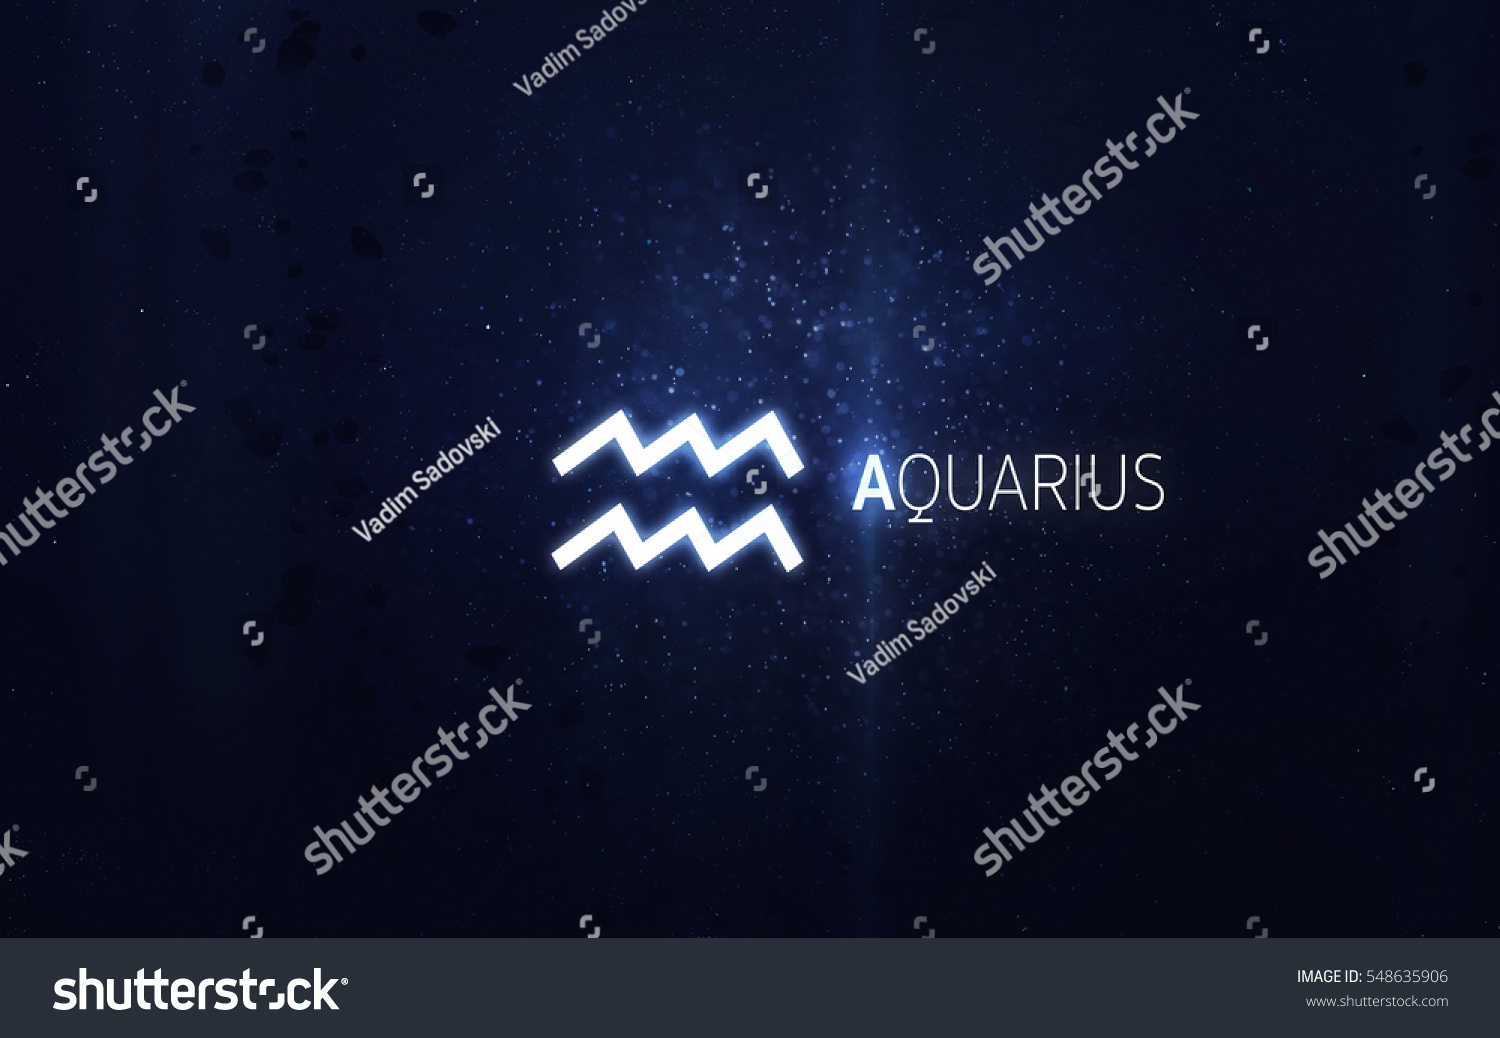 Zodiac Sign Aquarius Elements This Image Stock Photo 548635906 ...